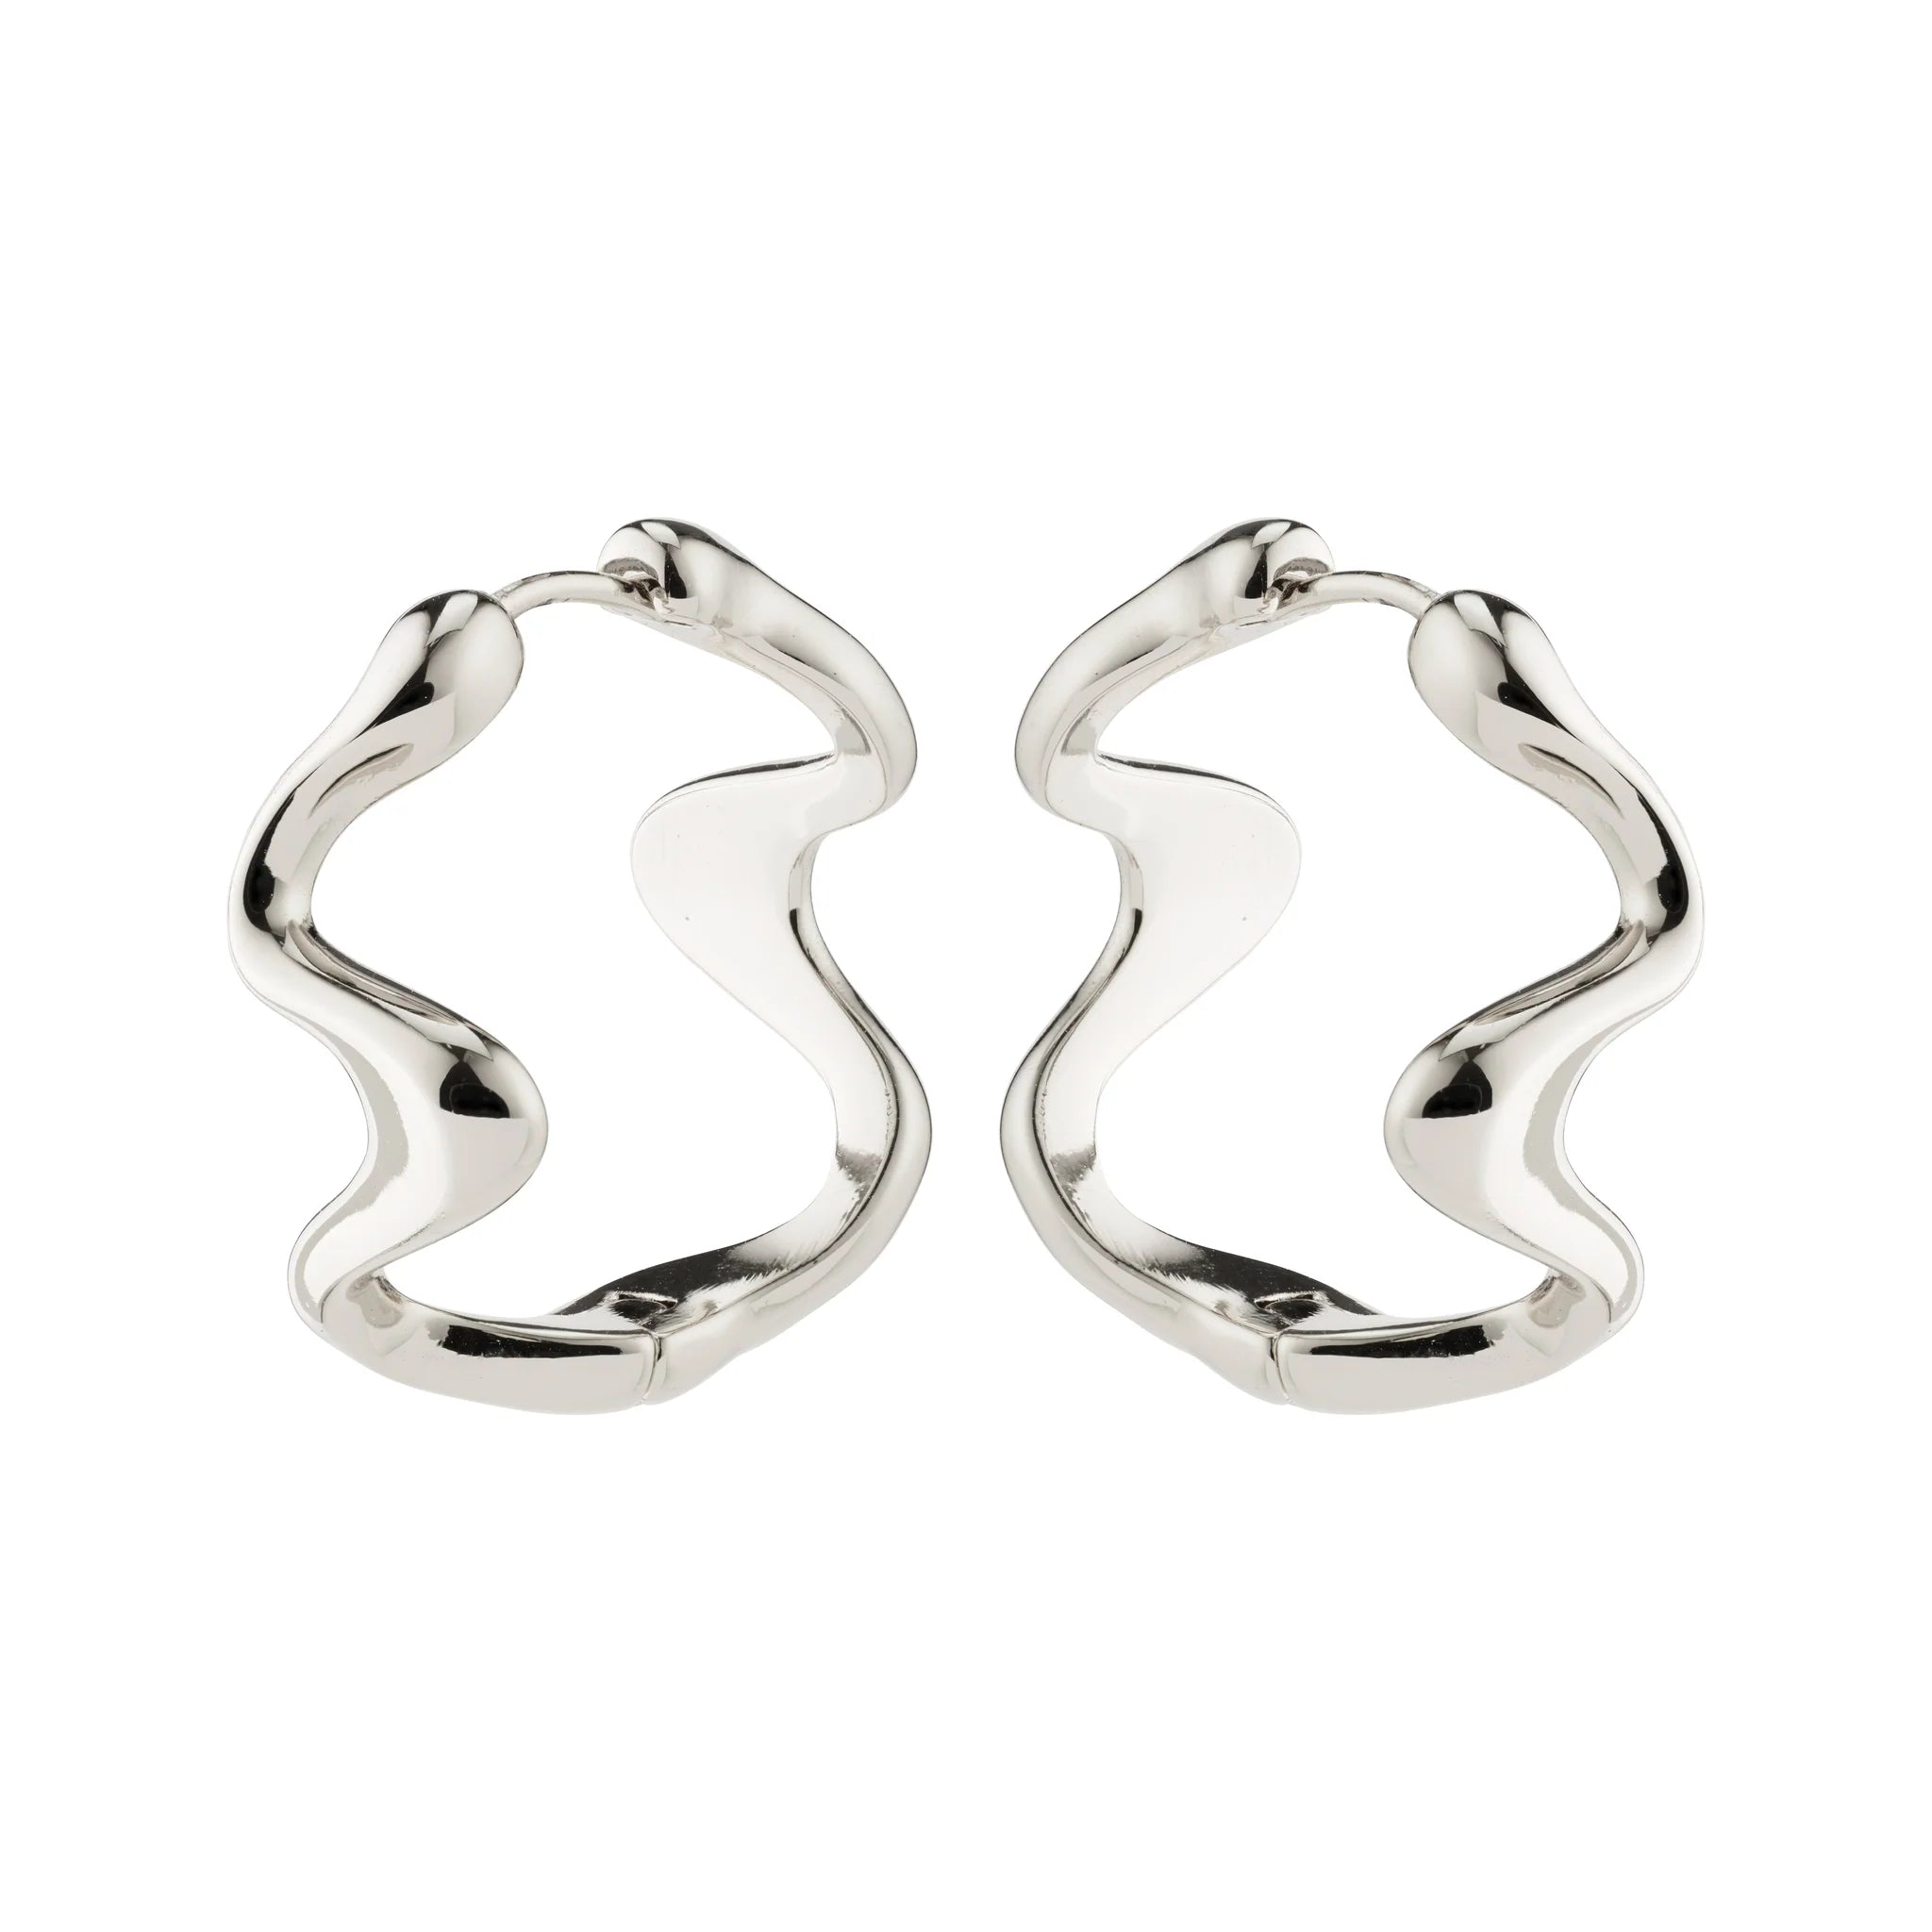 MOON earrings silver-plated